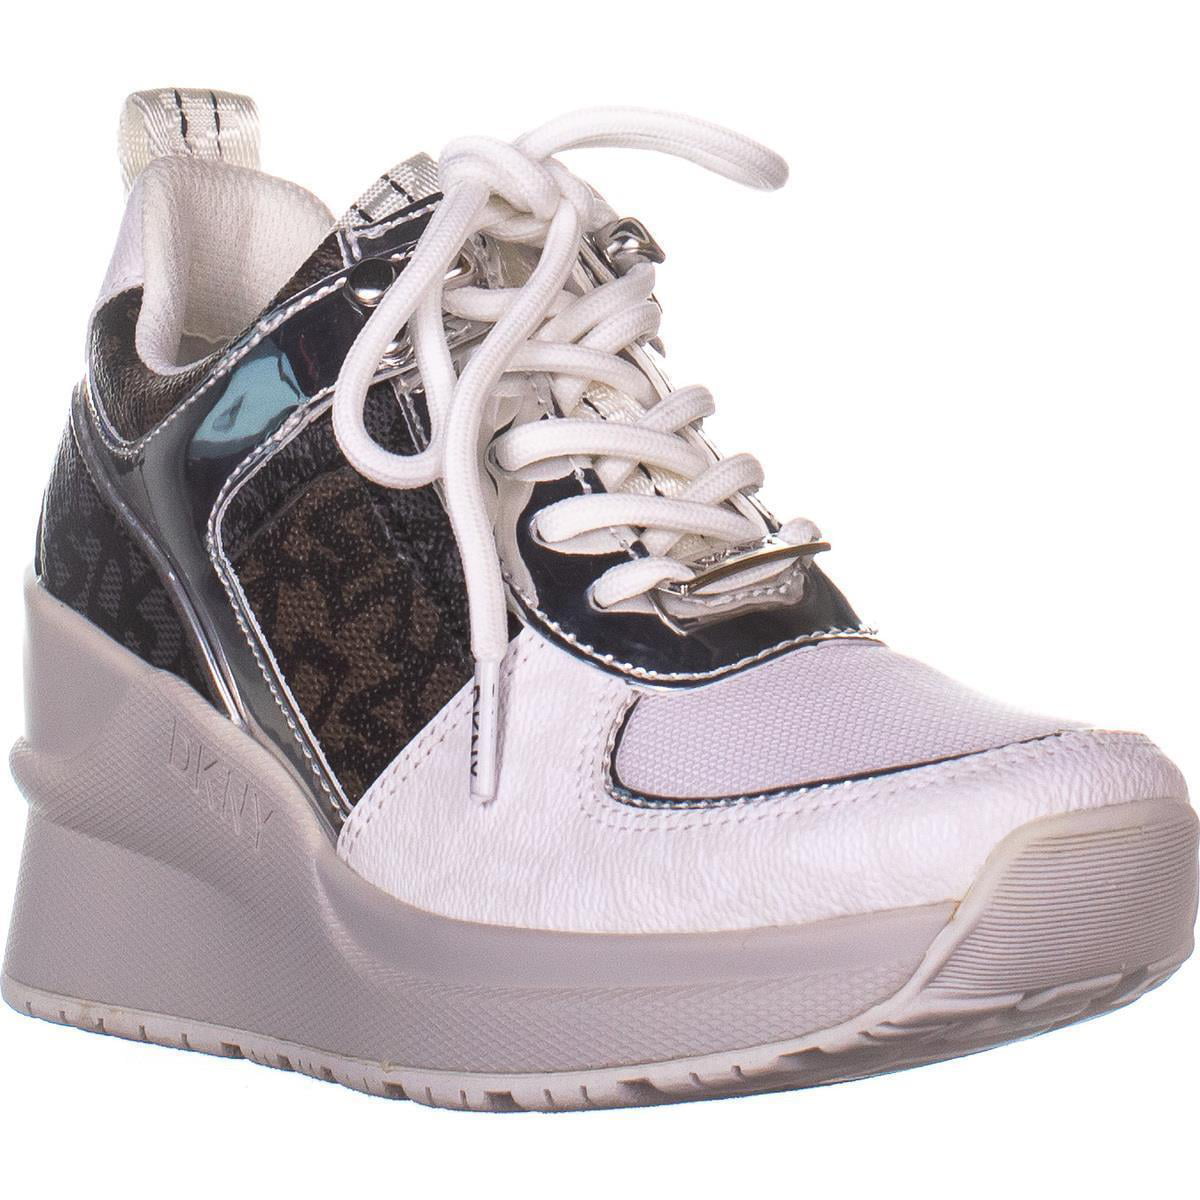 Tillid Milliard Underlegen Womens DKNY Leo Lace Up Wedge Sneakers, White/Brown, 5 US - Walmart.com